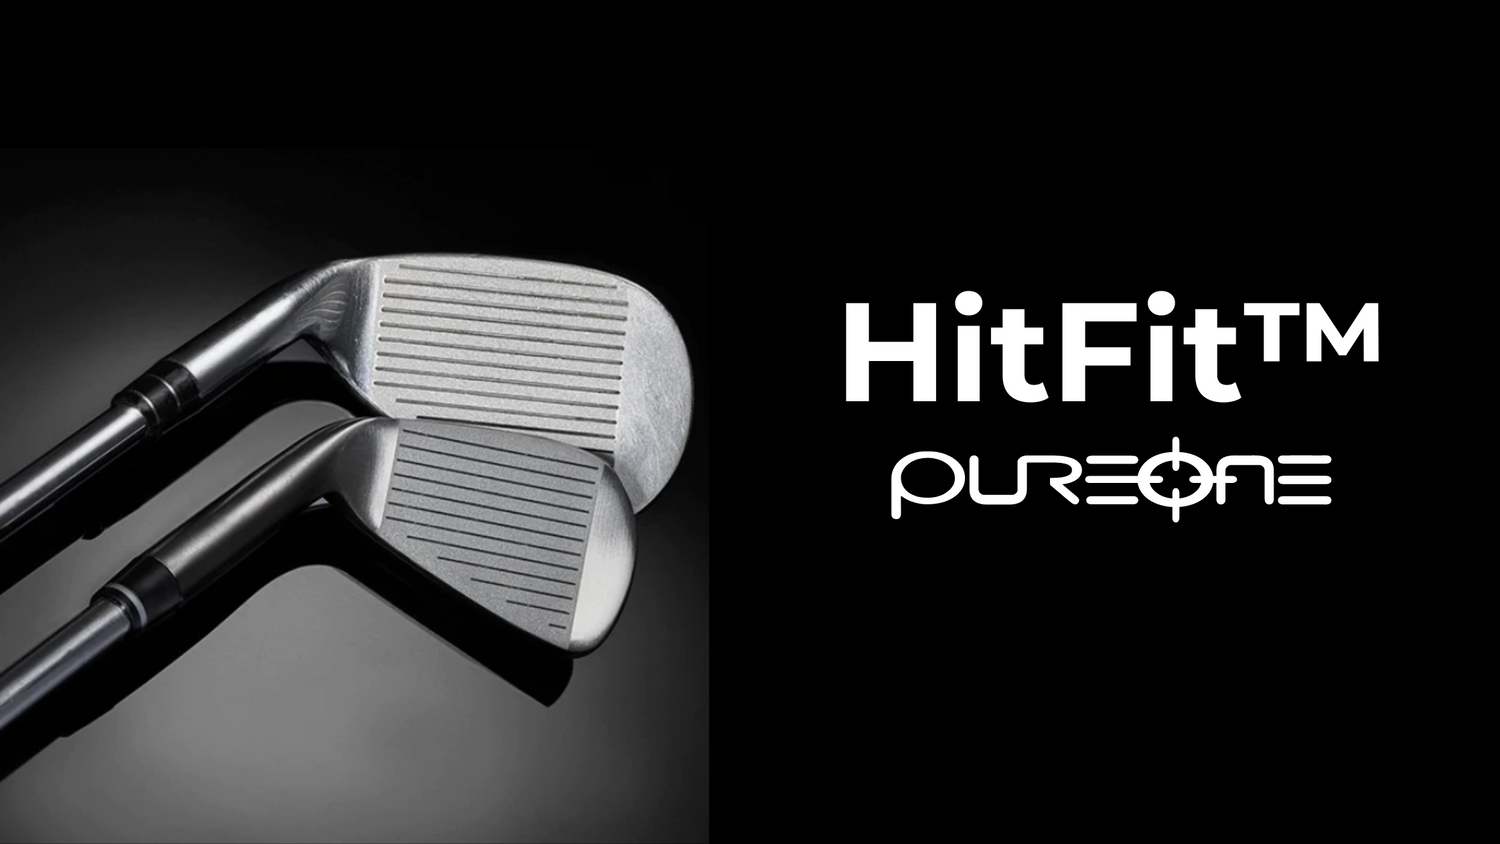 The HitFit™ PureOne Golf club